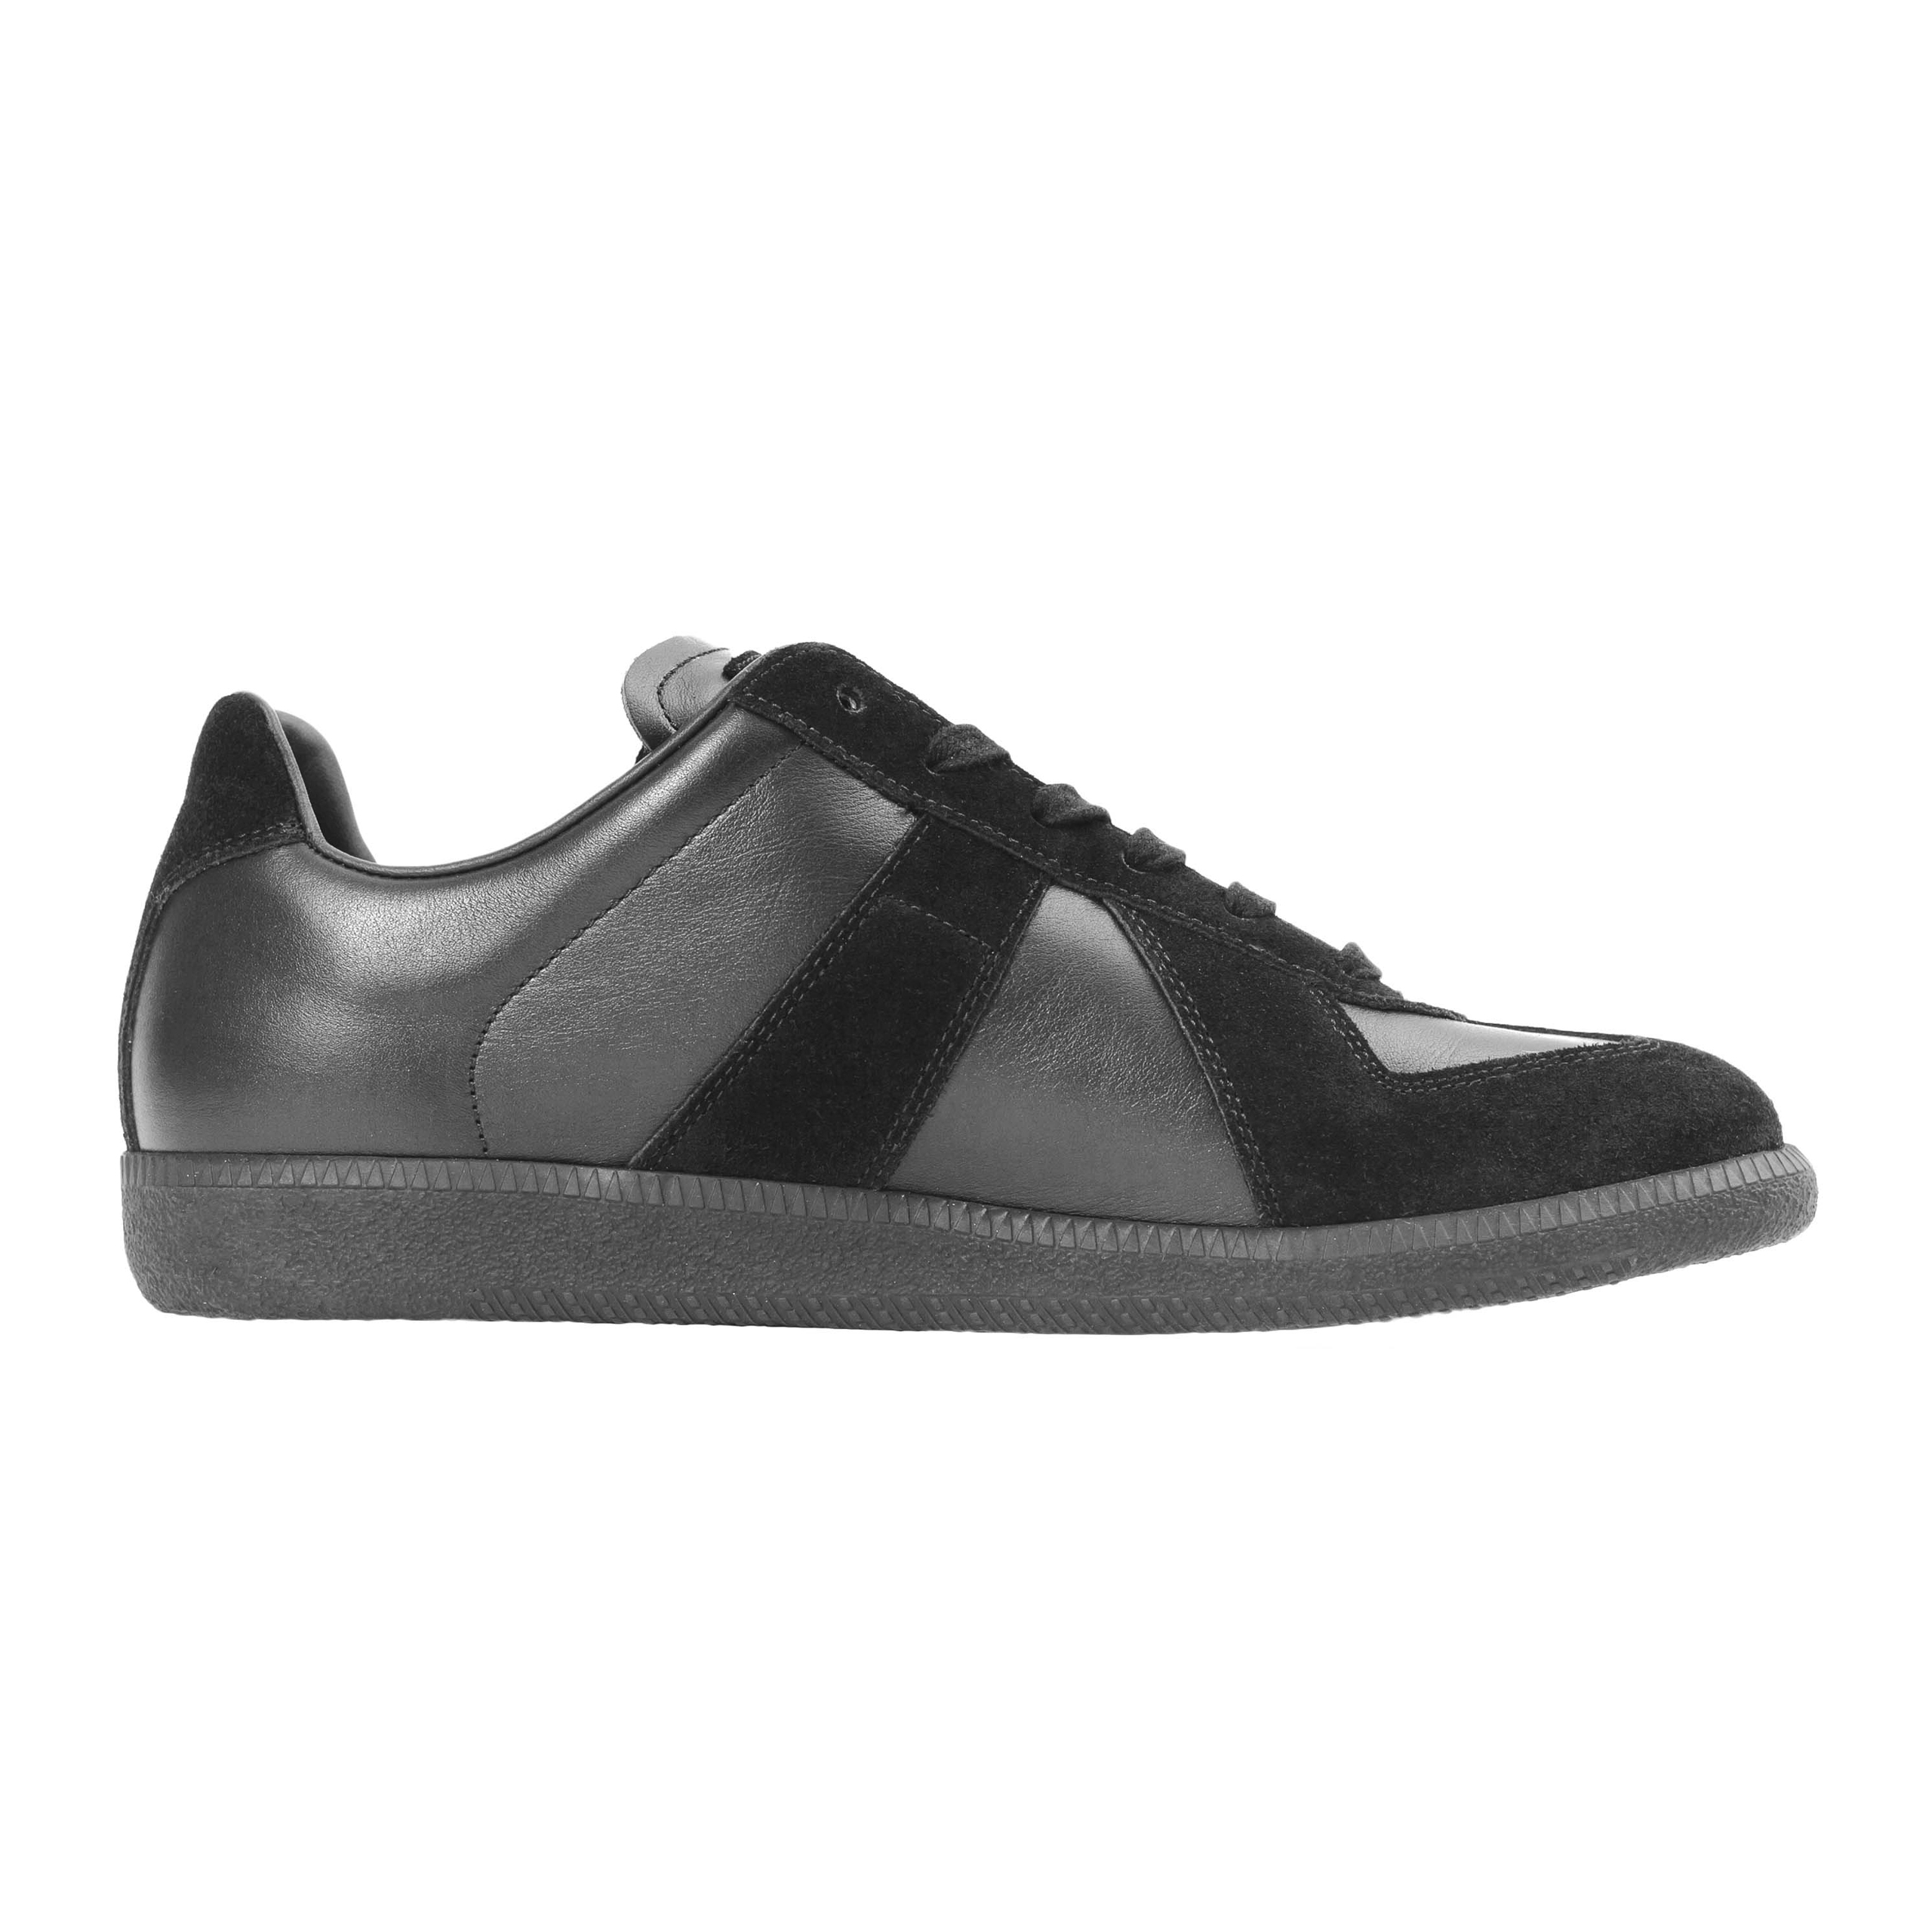 Buy Maison Margiela men black leather replica sneakers for $449 